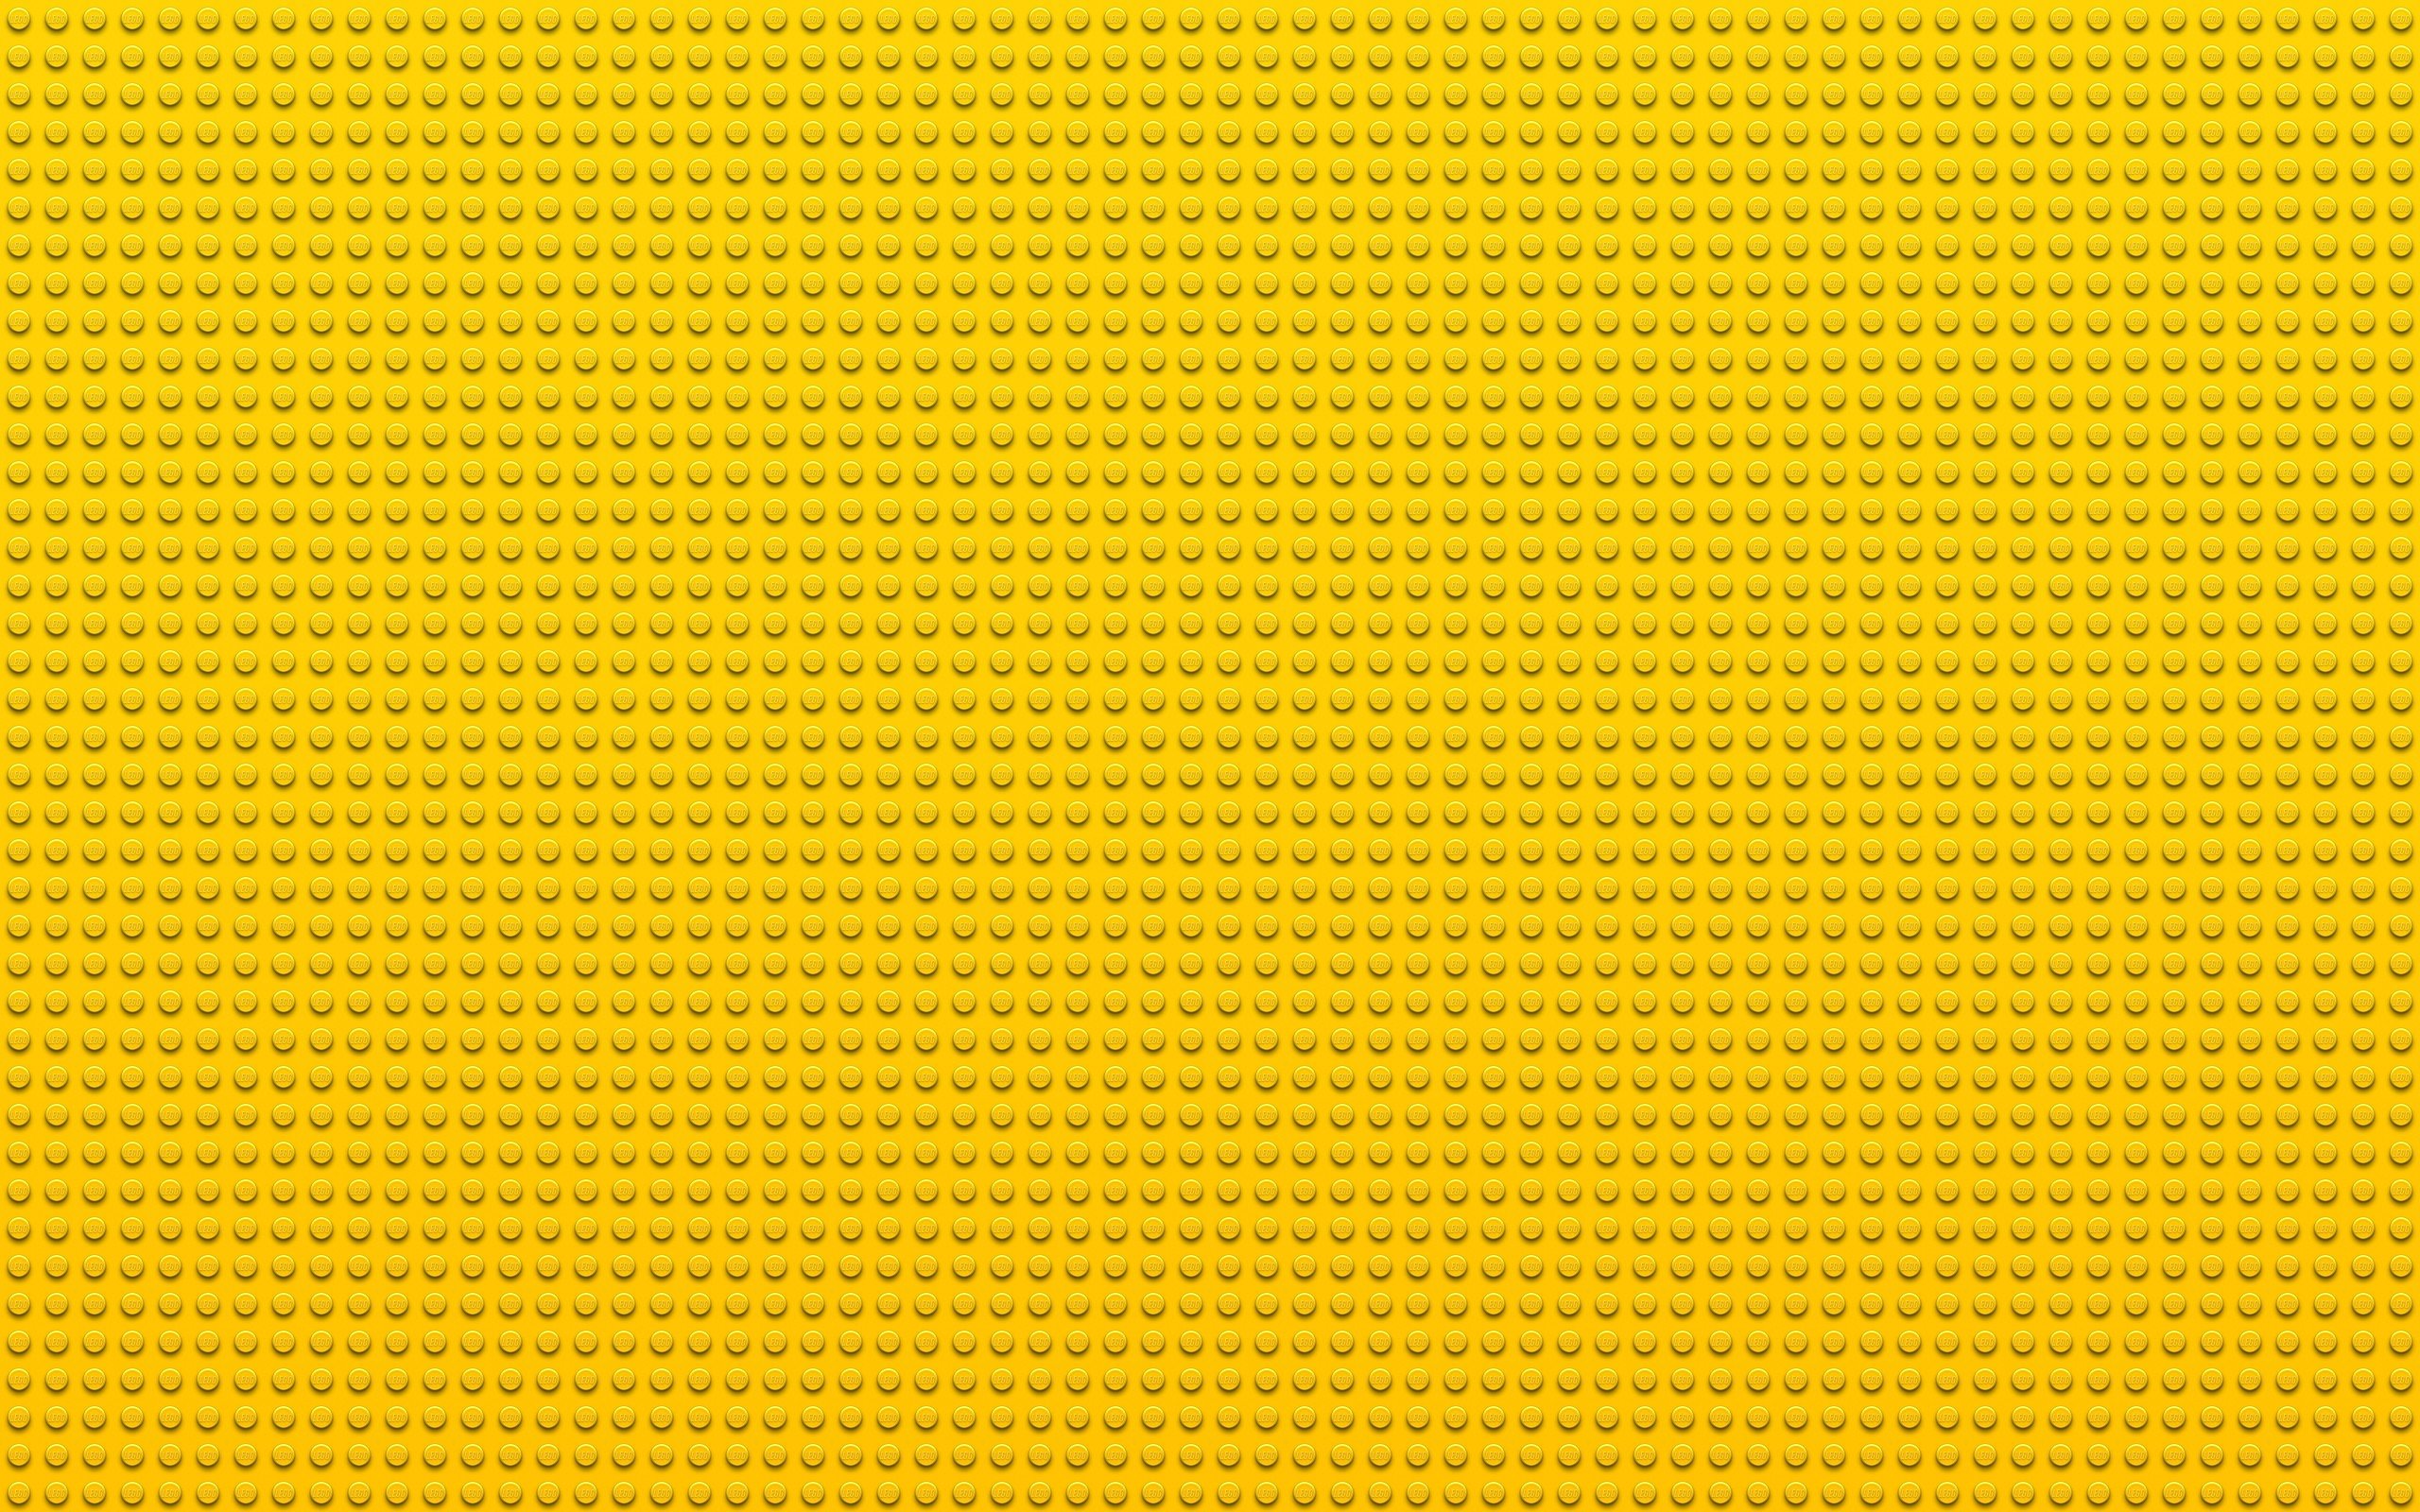 Lego Yellow Wallpaper 2560x1600 Lego Yellow Textures Dots